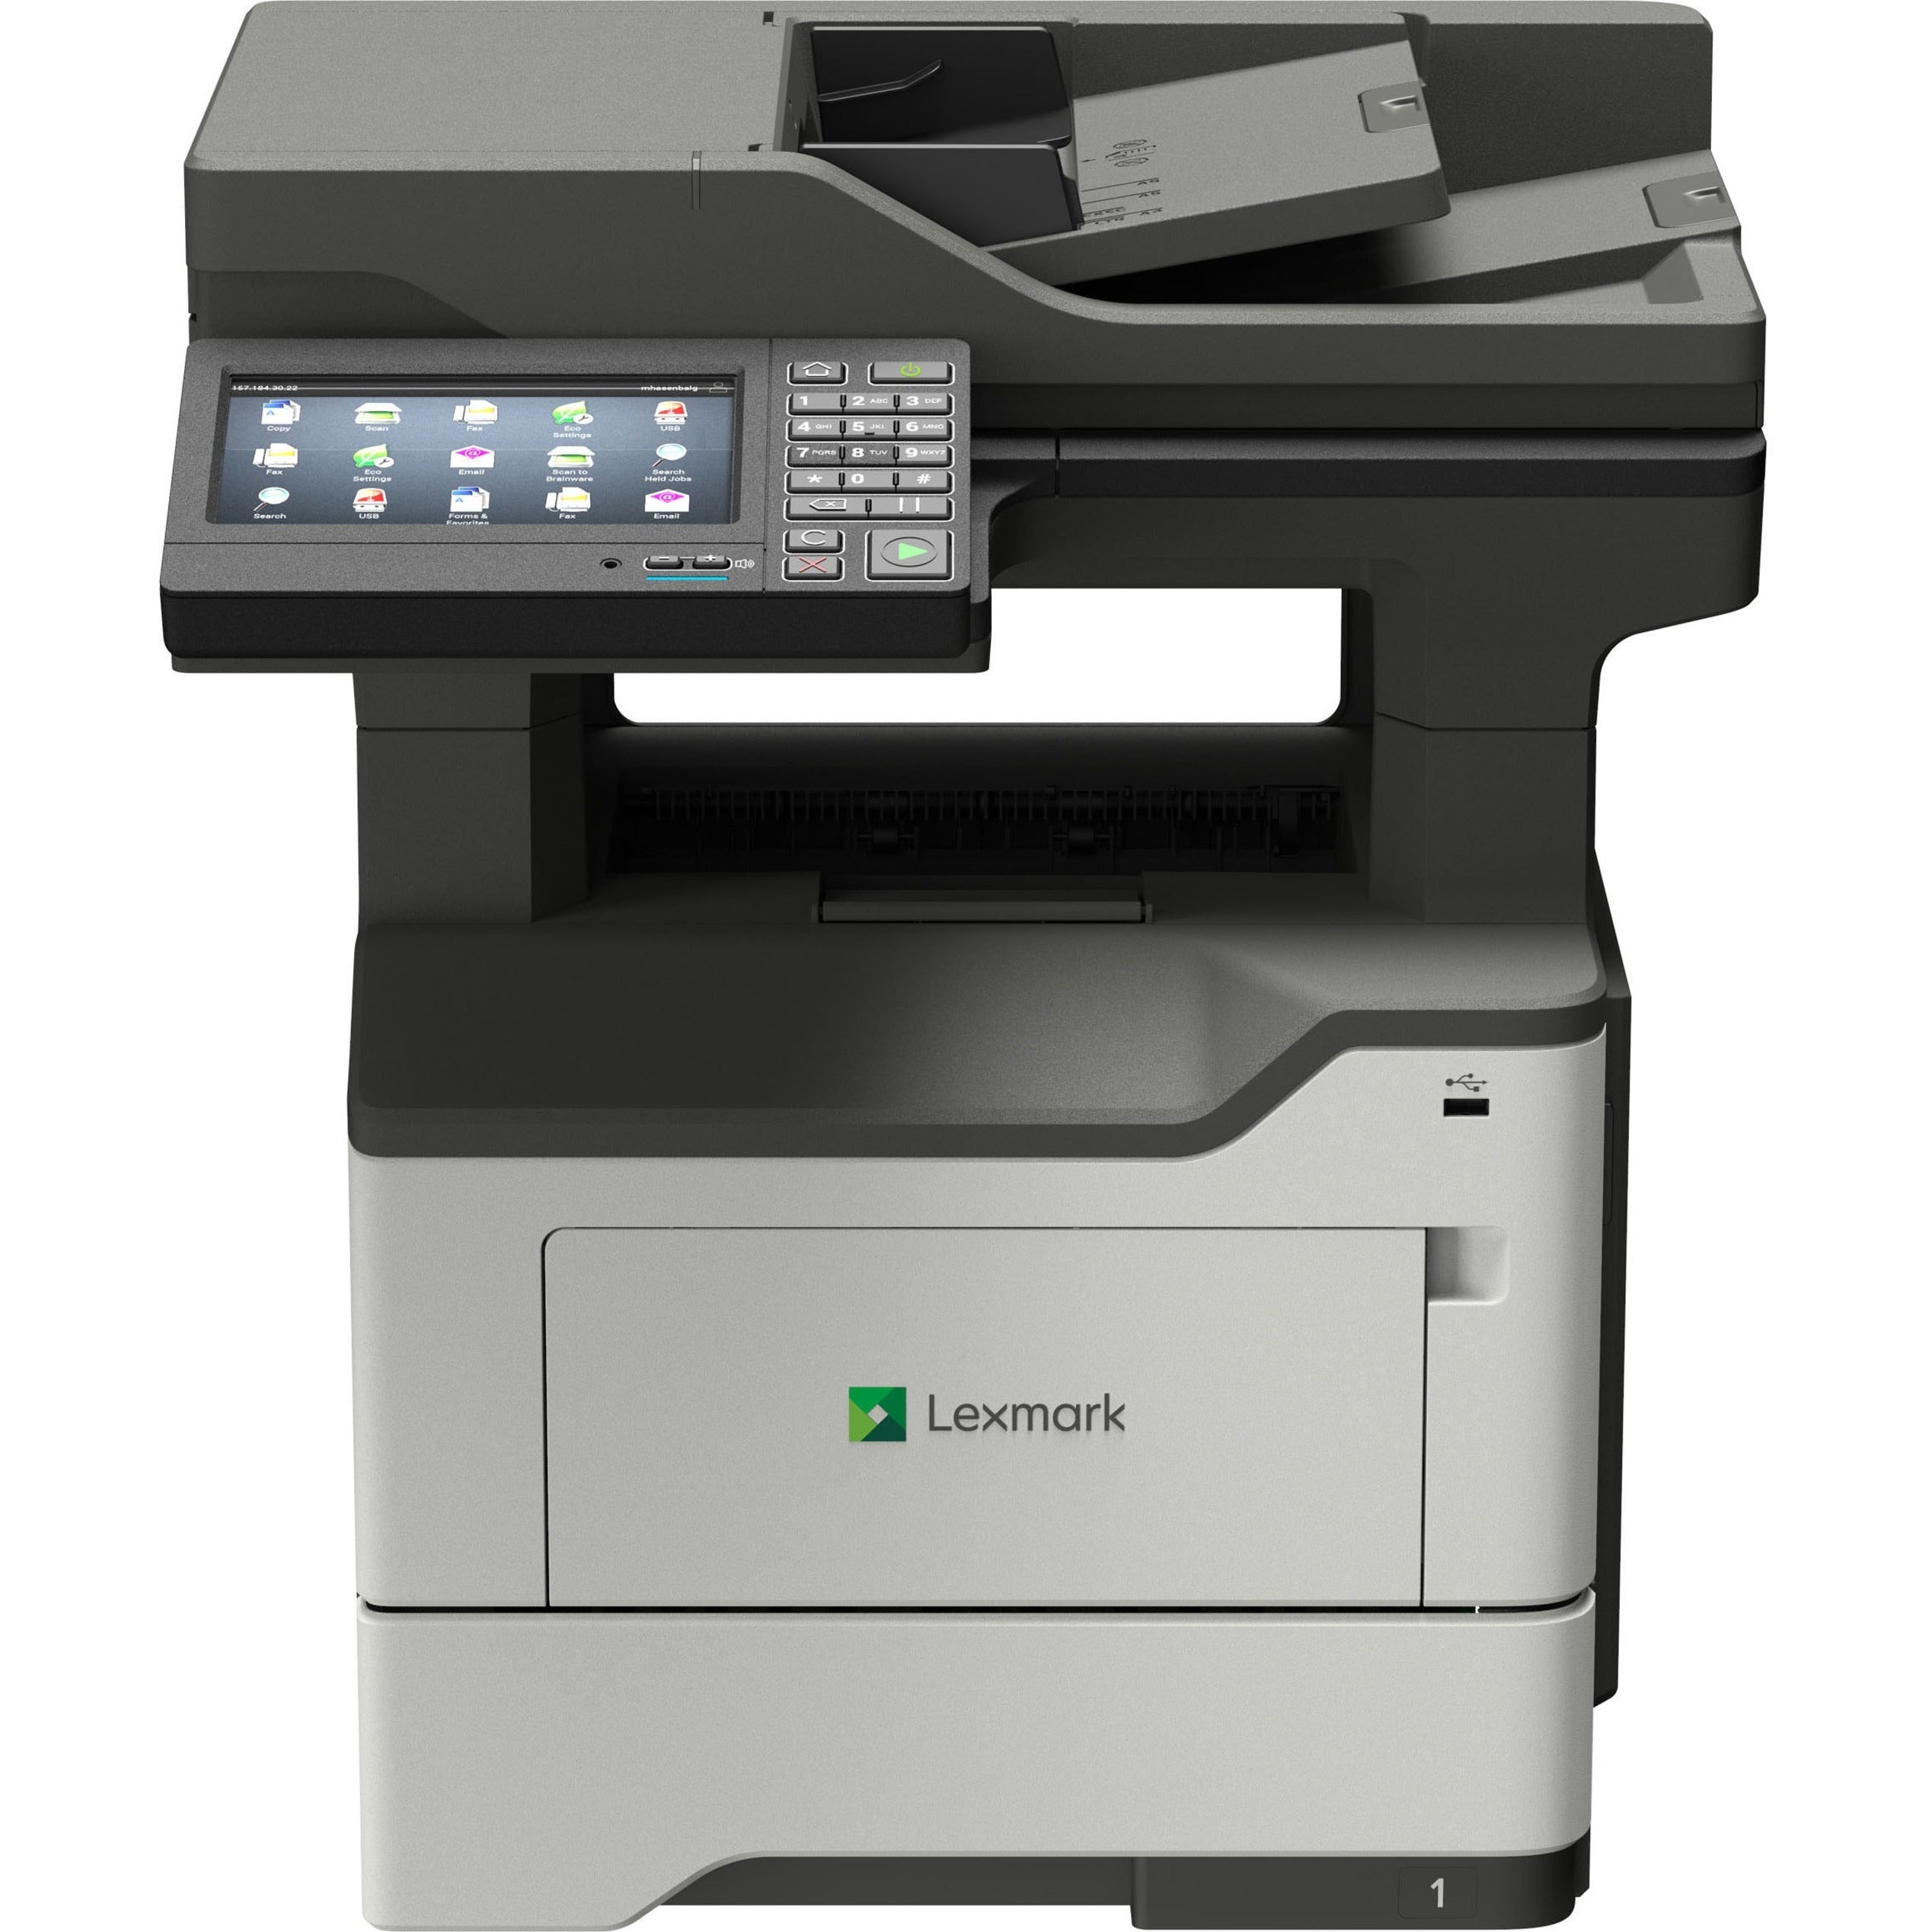 Lexmark 36S0900 MX622ade Multifunction Monochrome Laser Printer, 50 ppm, 1200 x 1200 dpi, Automatic Duplex Printing